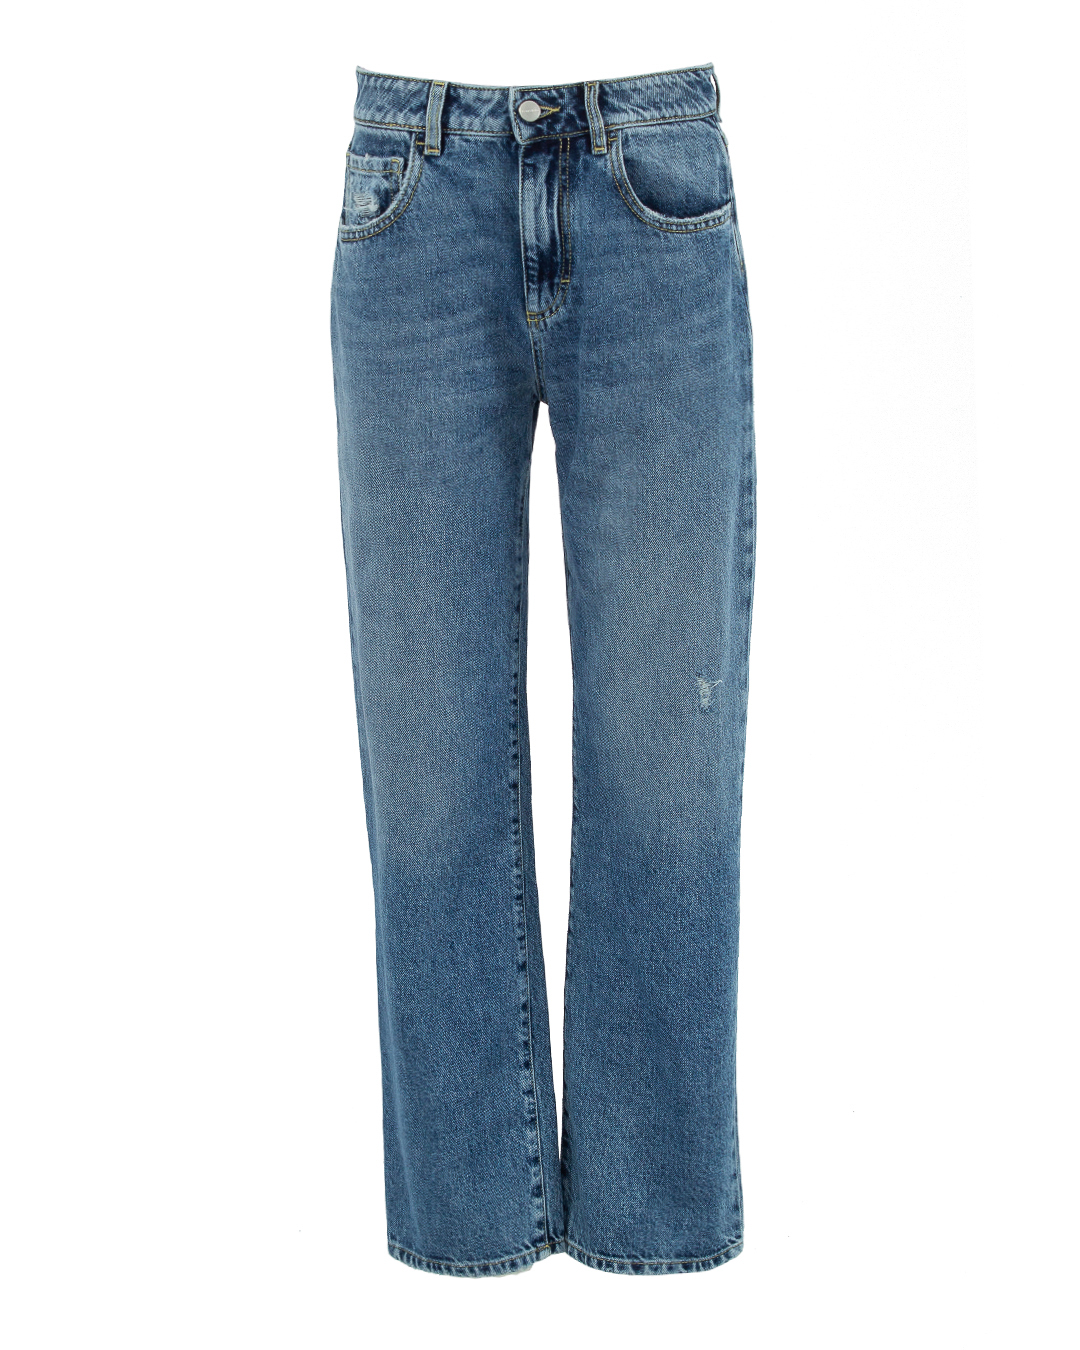 джинсы ICON DENIM BELLAID709 синий 26, размер 26 - фото 1